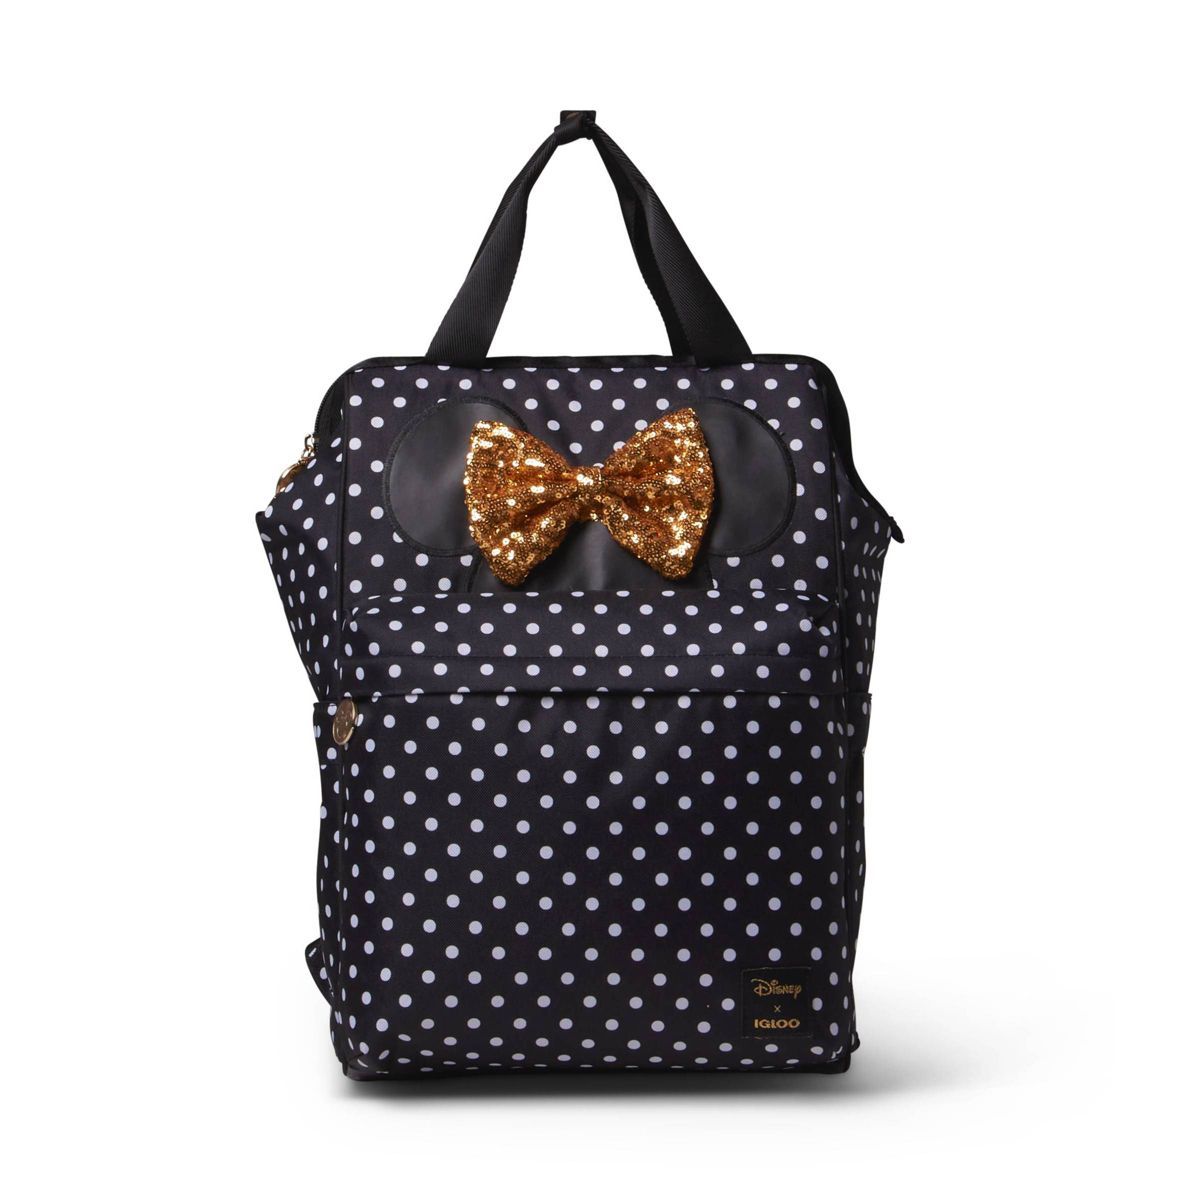 Igloo Disney Minnie Mouse Leftover Backpack 24 Cans Soft-Sided Cooler - Black | Target